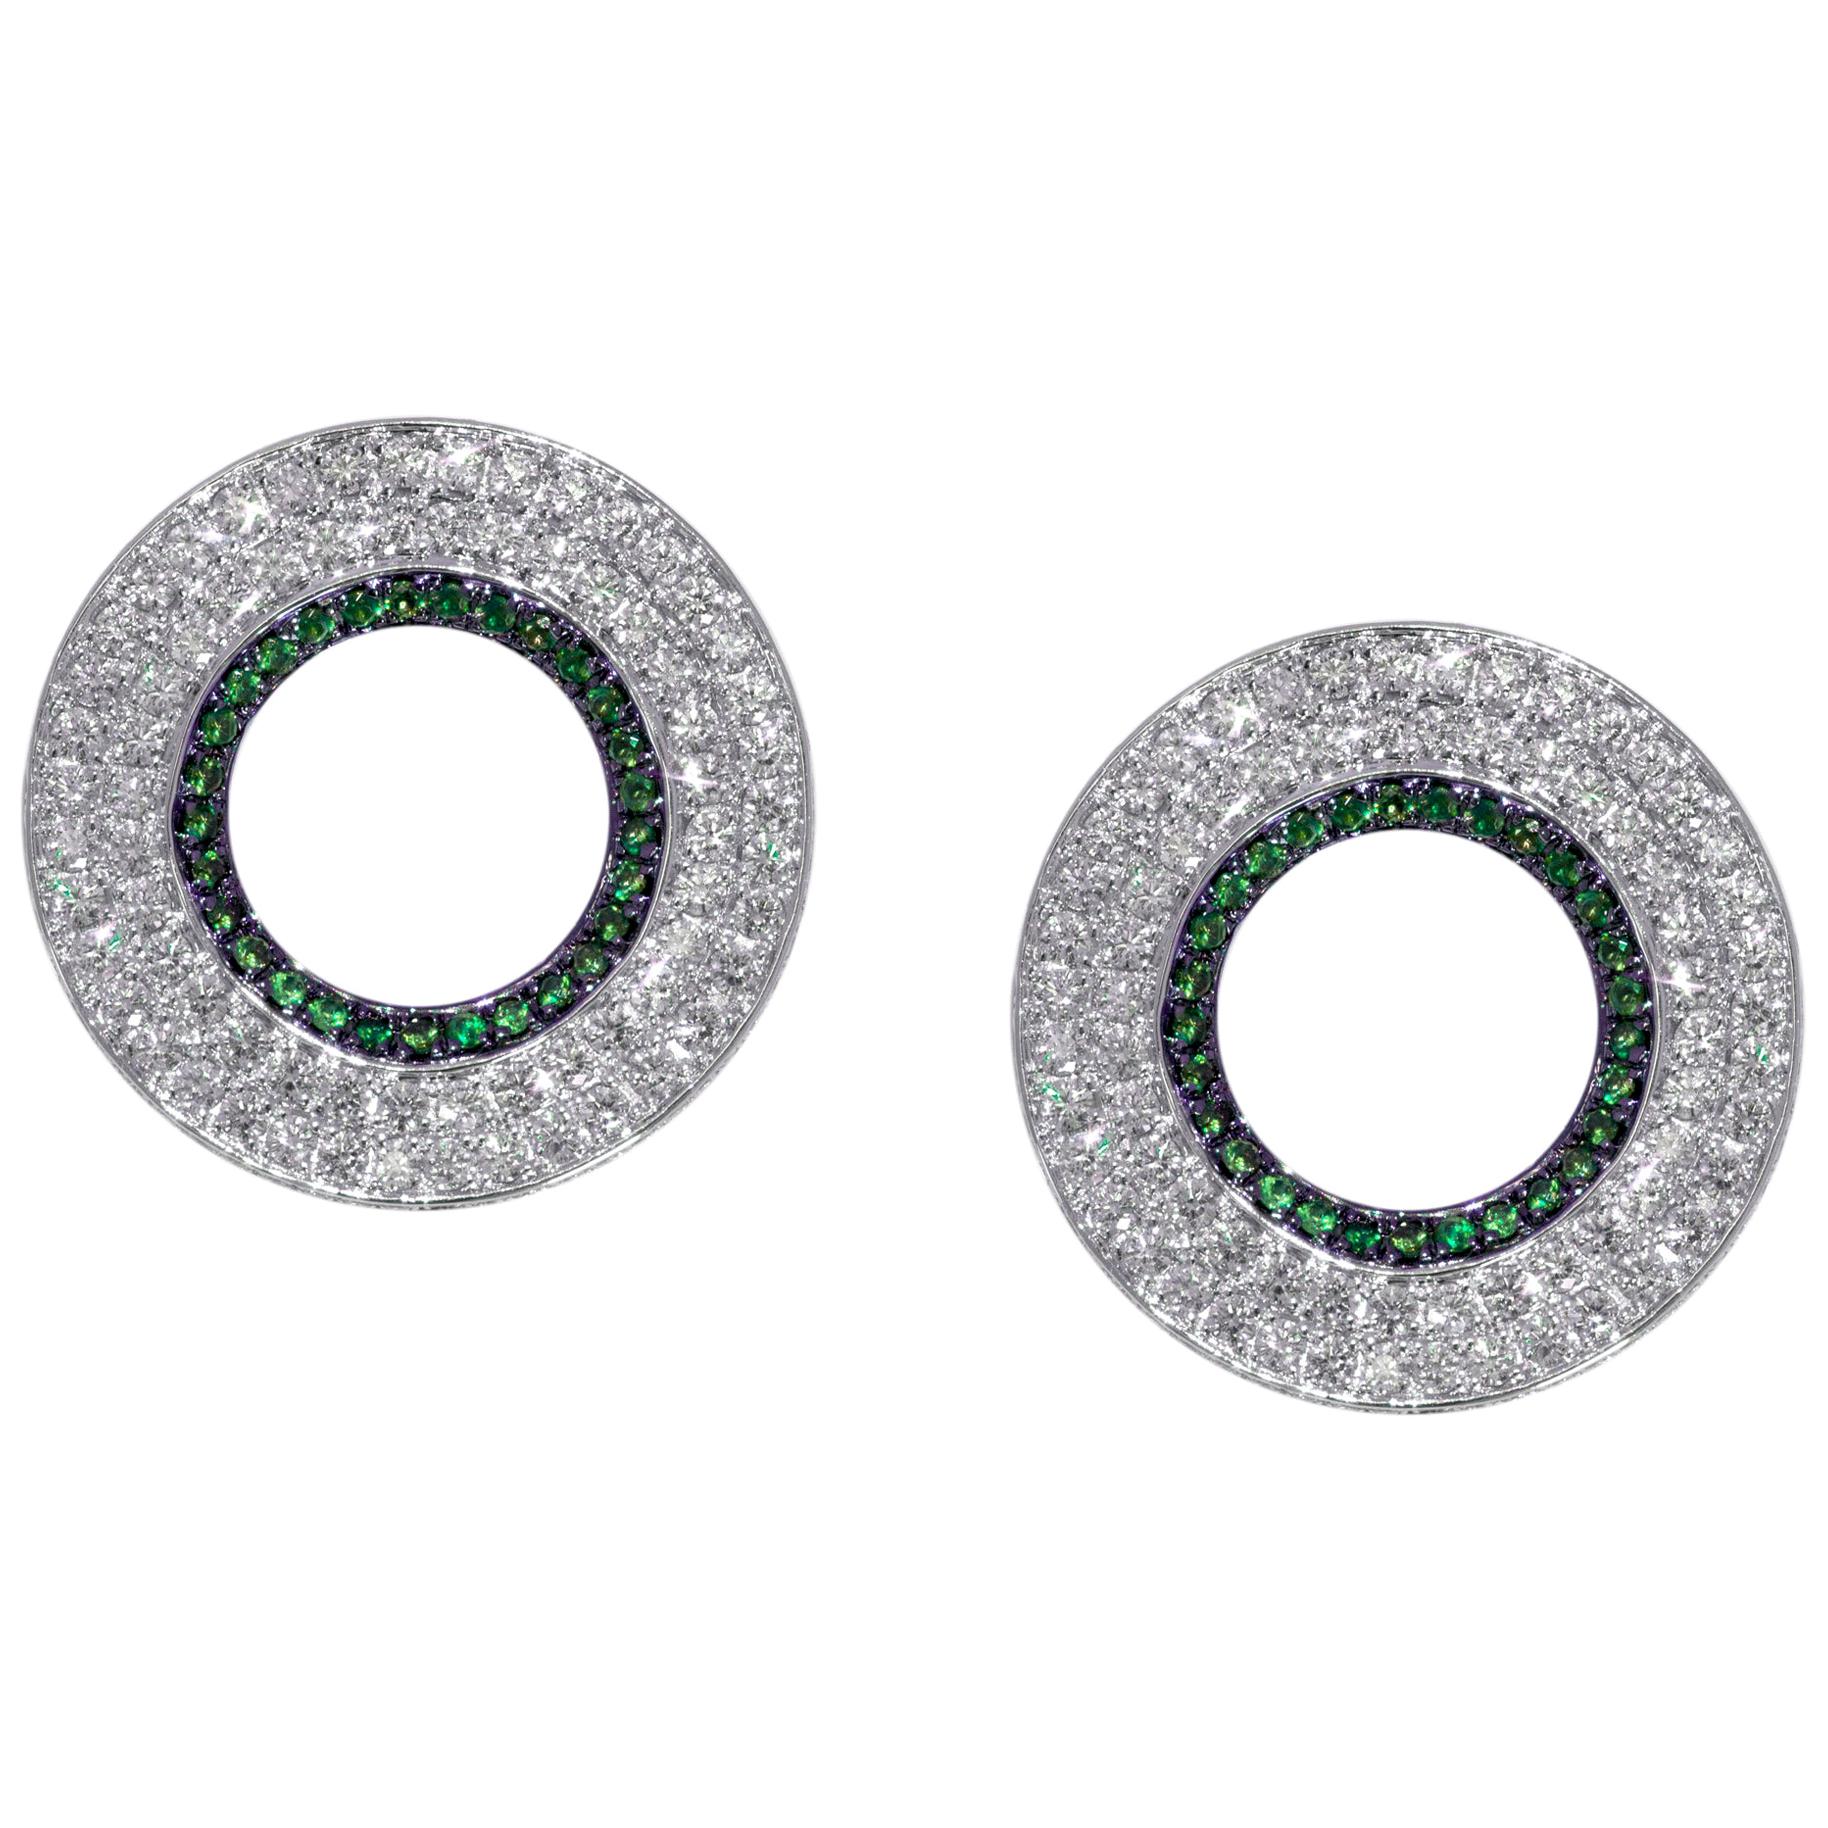 Ralph Masri Modernist Circular Diamond and Emerald Earrings